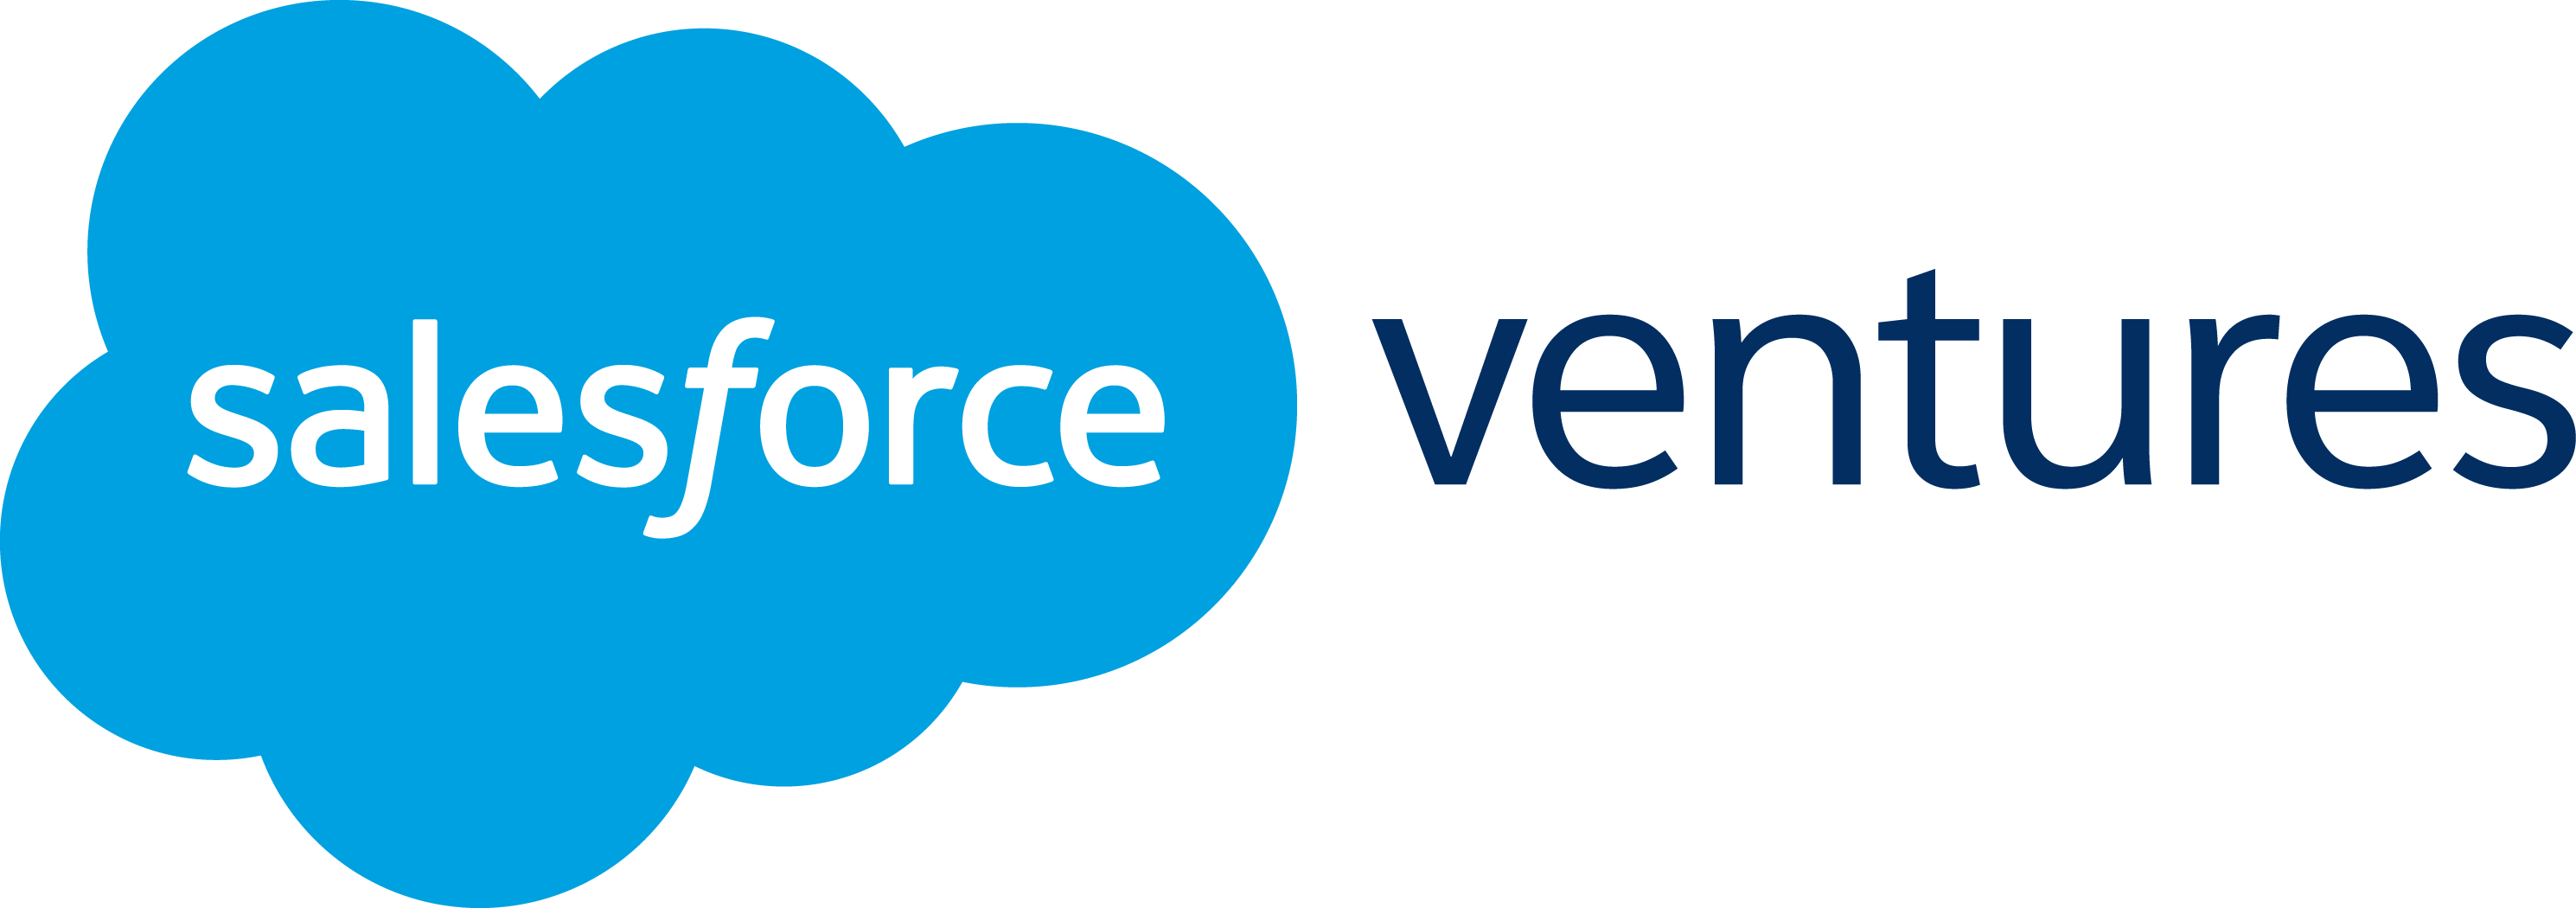 Salesforce-Ventures-Logo